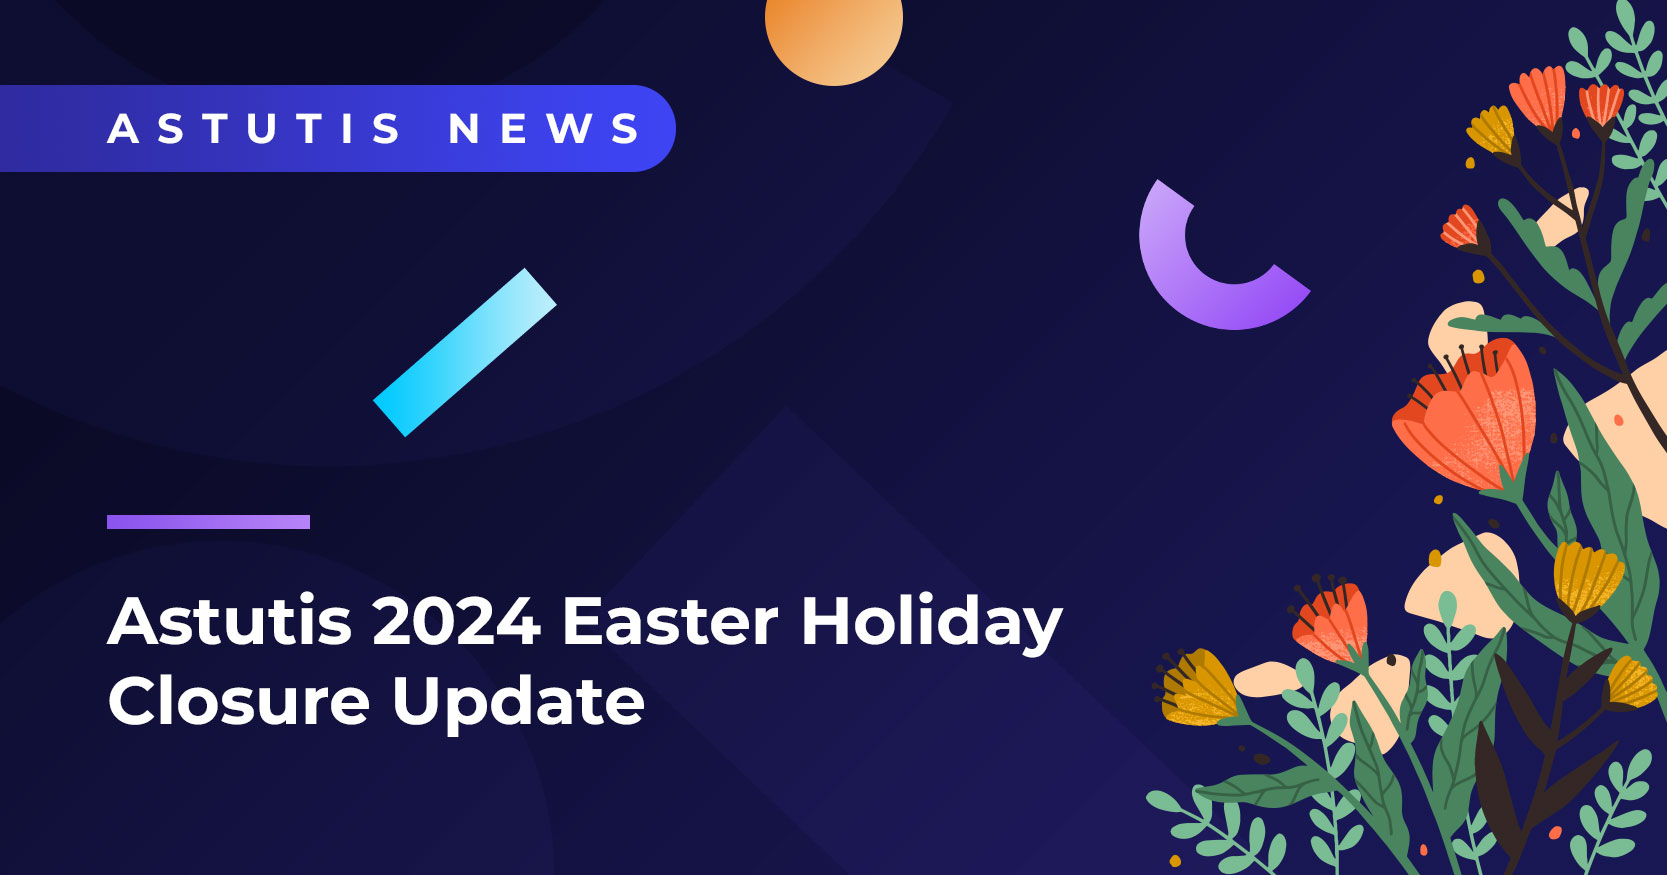 Astutis 2024 Easter Holiday Closure Update Image